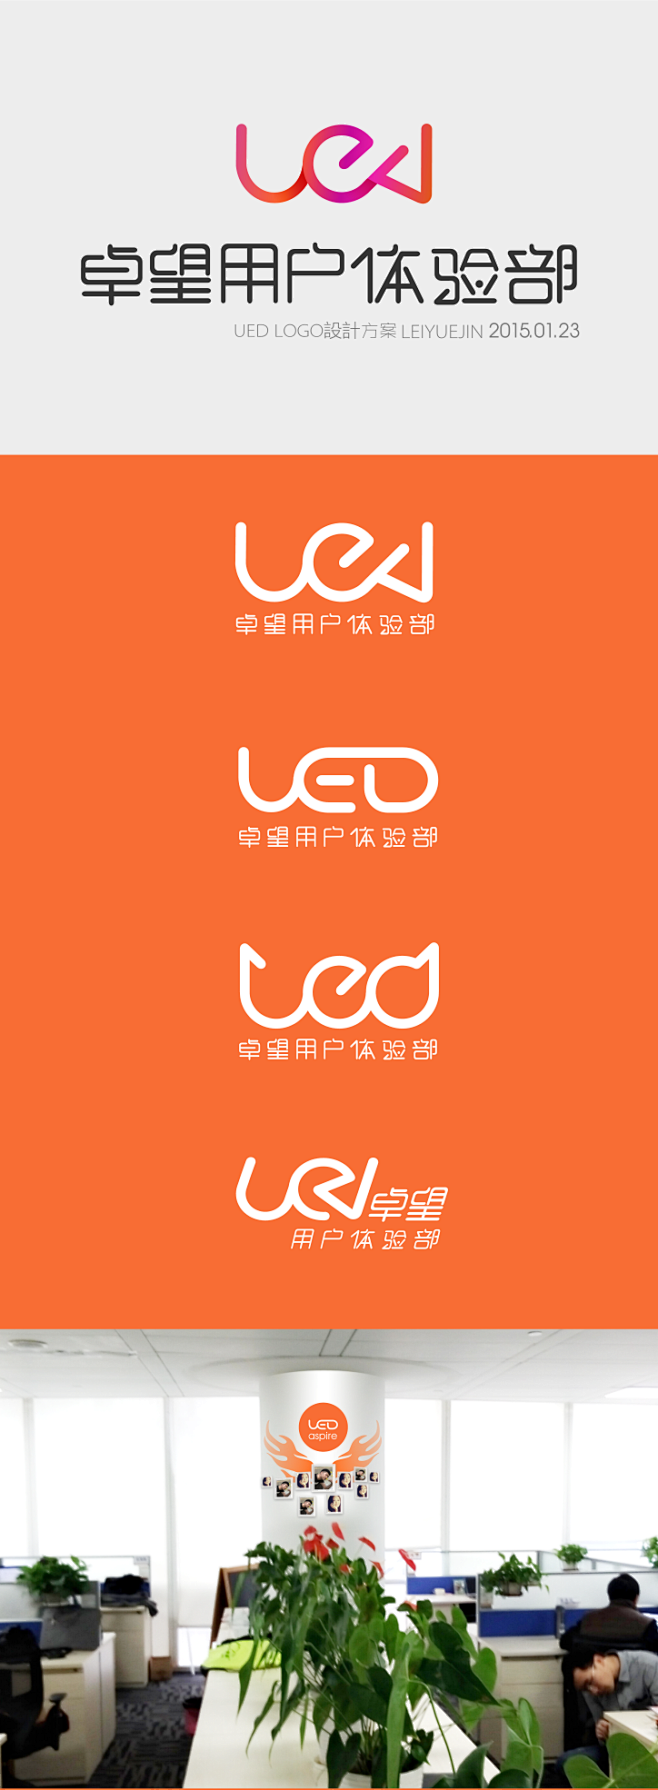 ued logo design : lo...